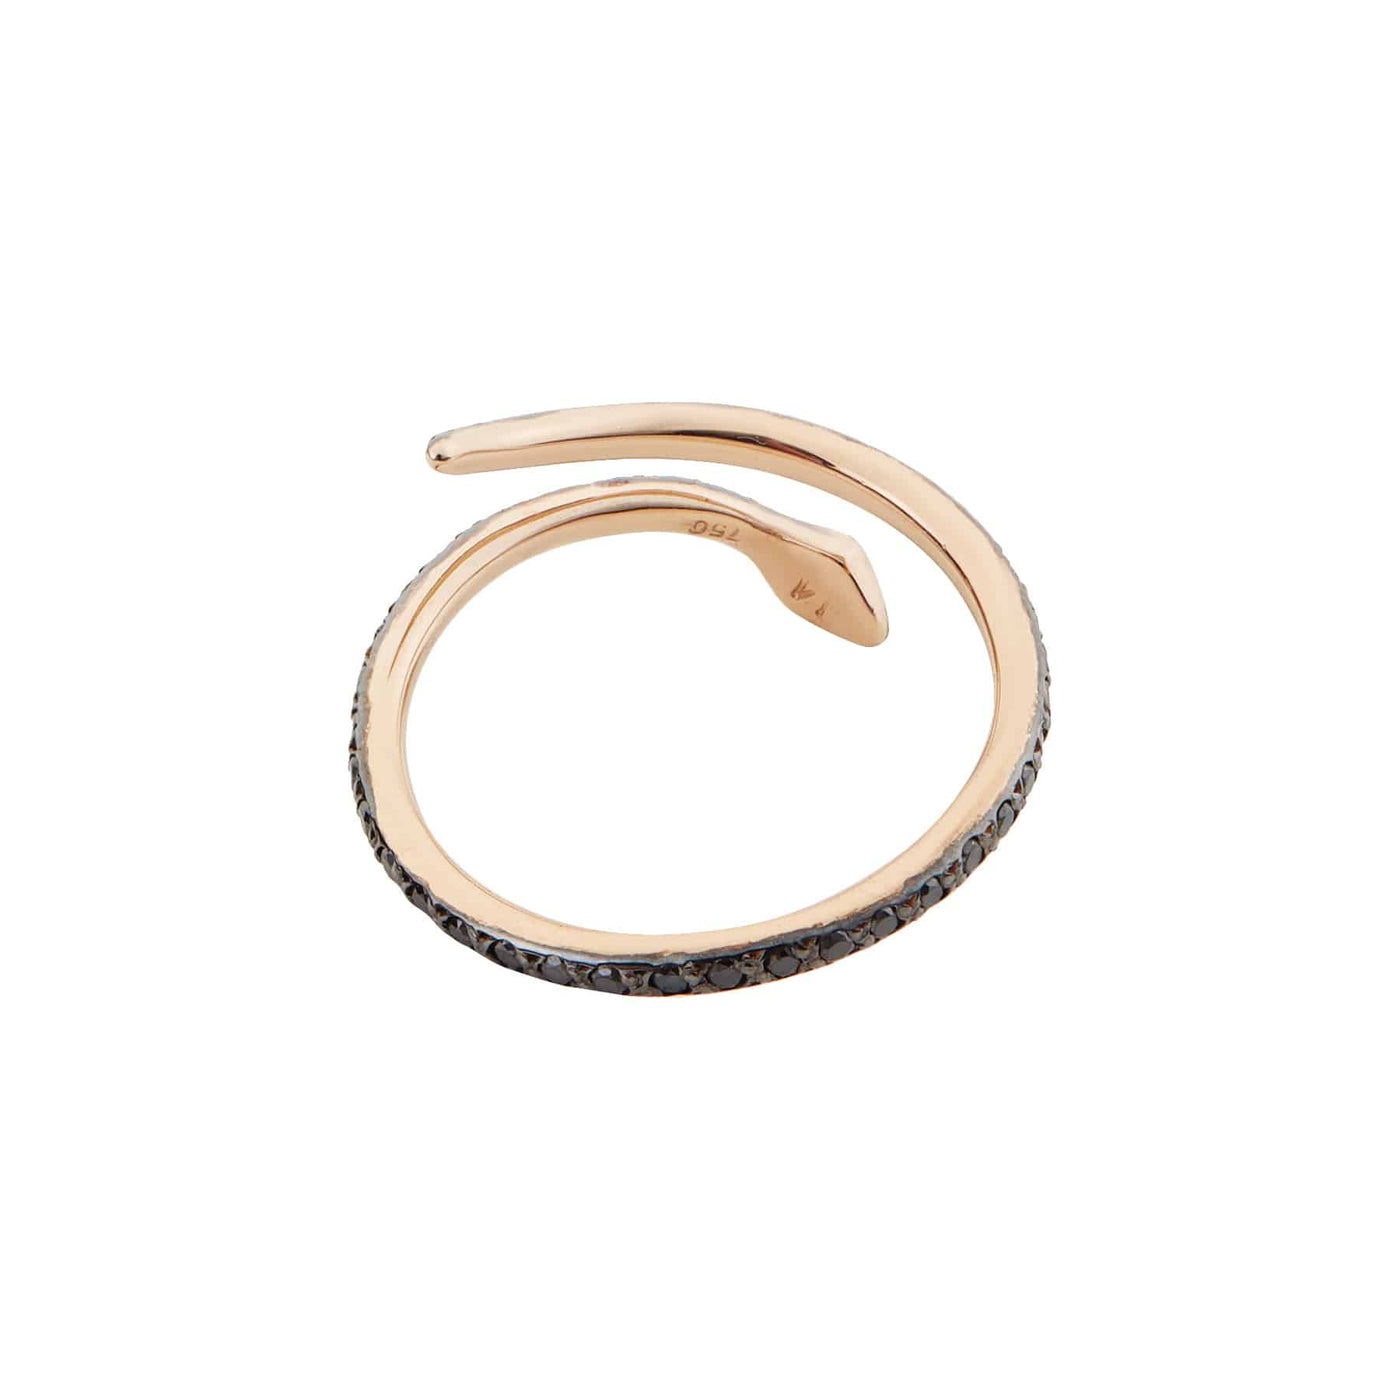 Small Black Python Ring - SNAKES - Ileana Makri store